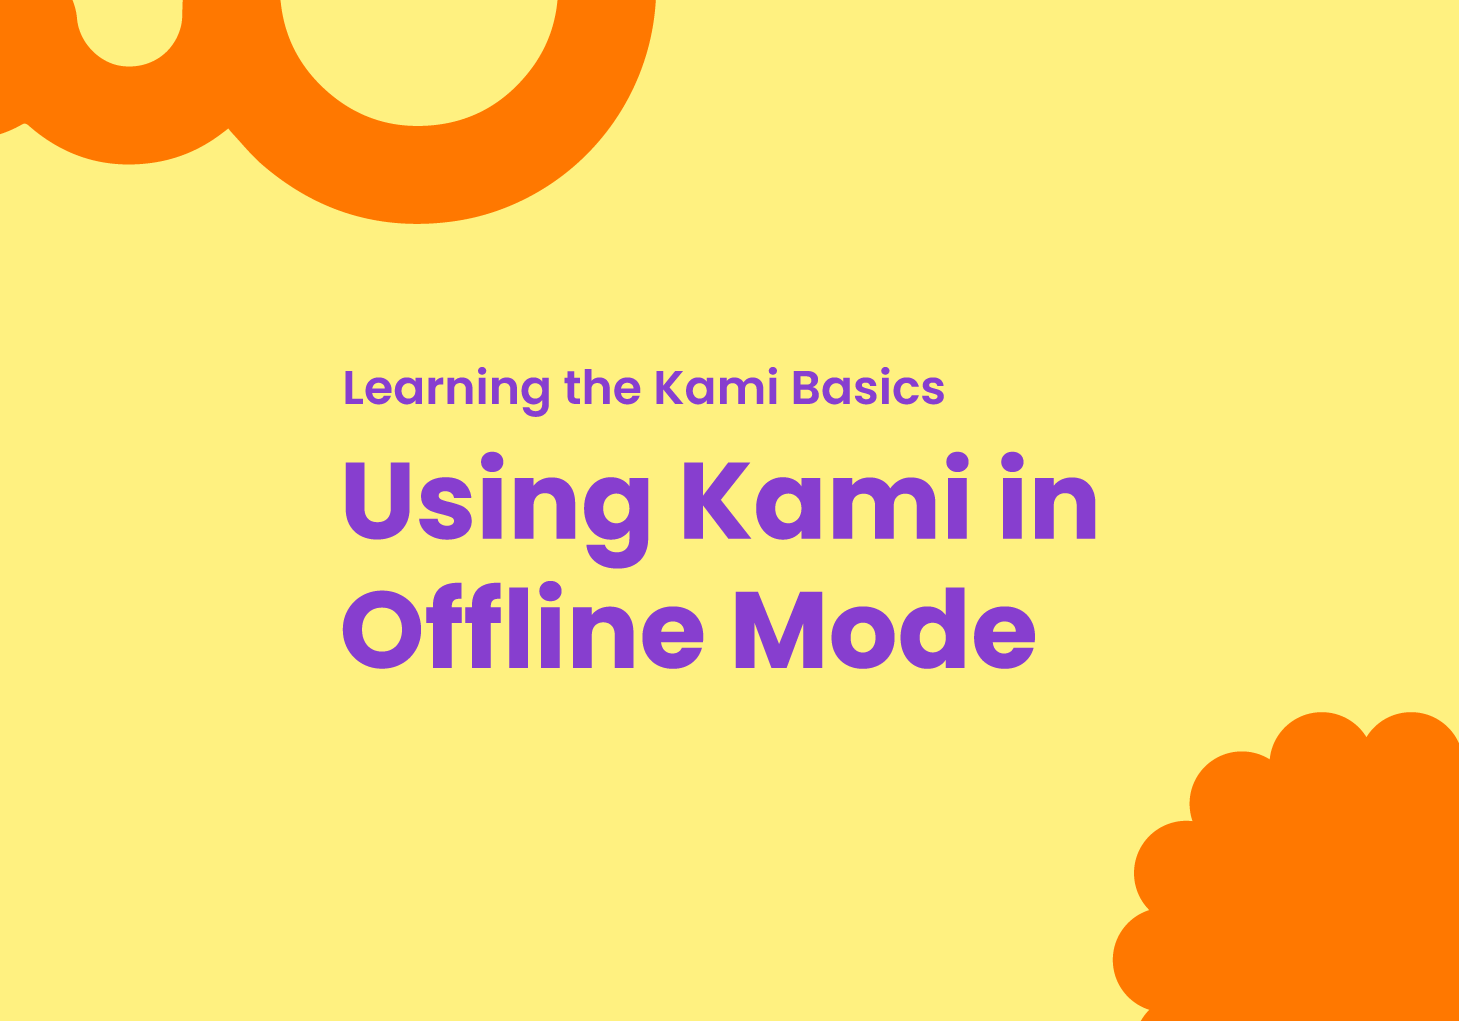 Learning the Kami Basics: Using Kami in Offline Mode